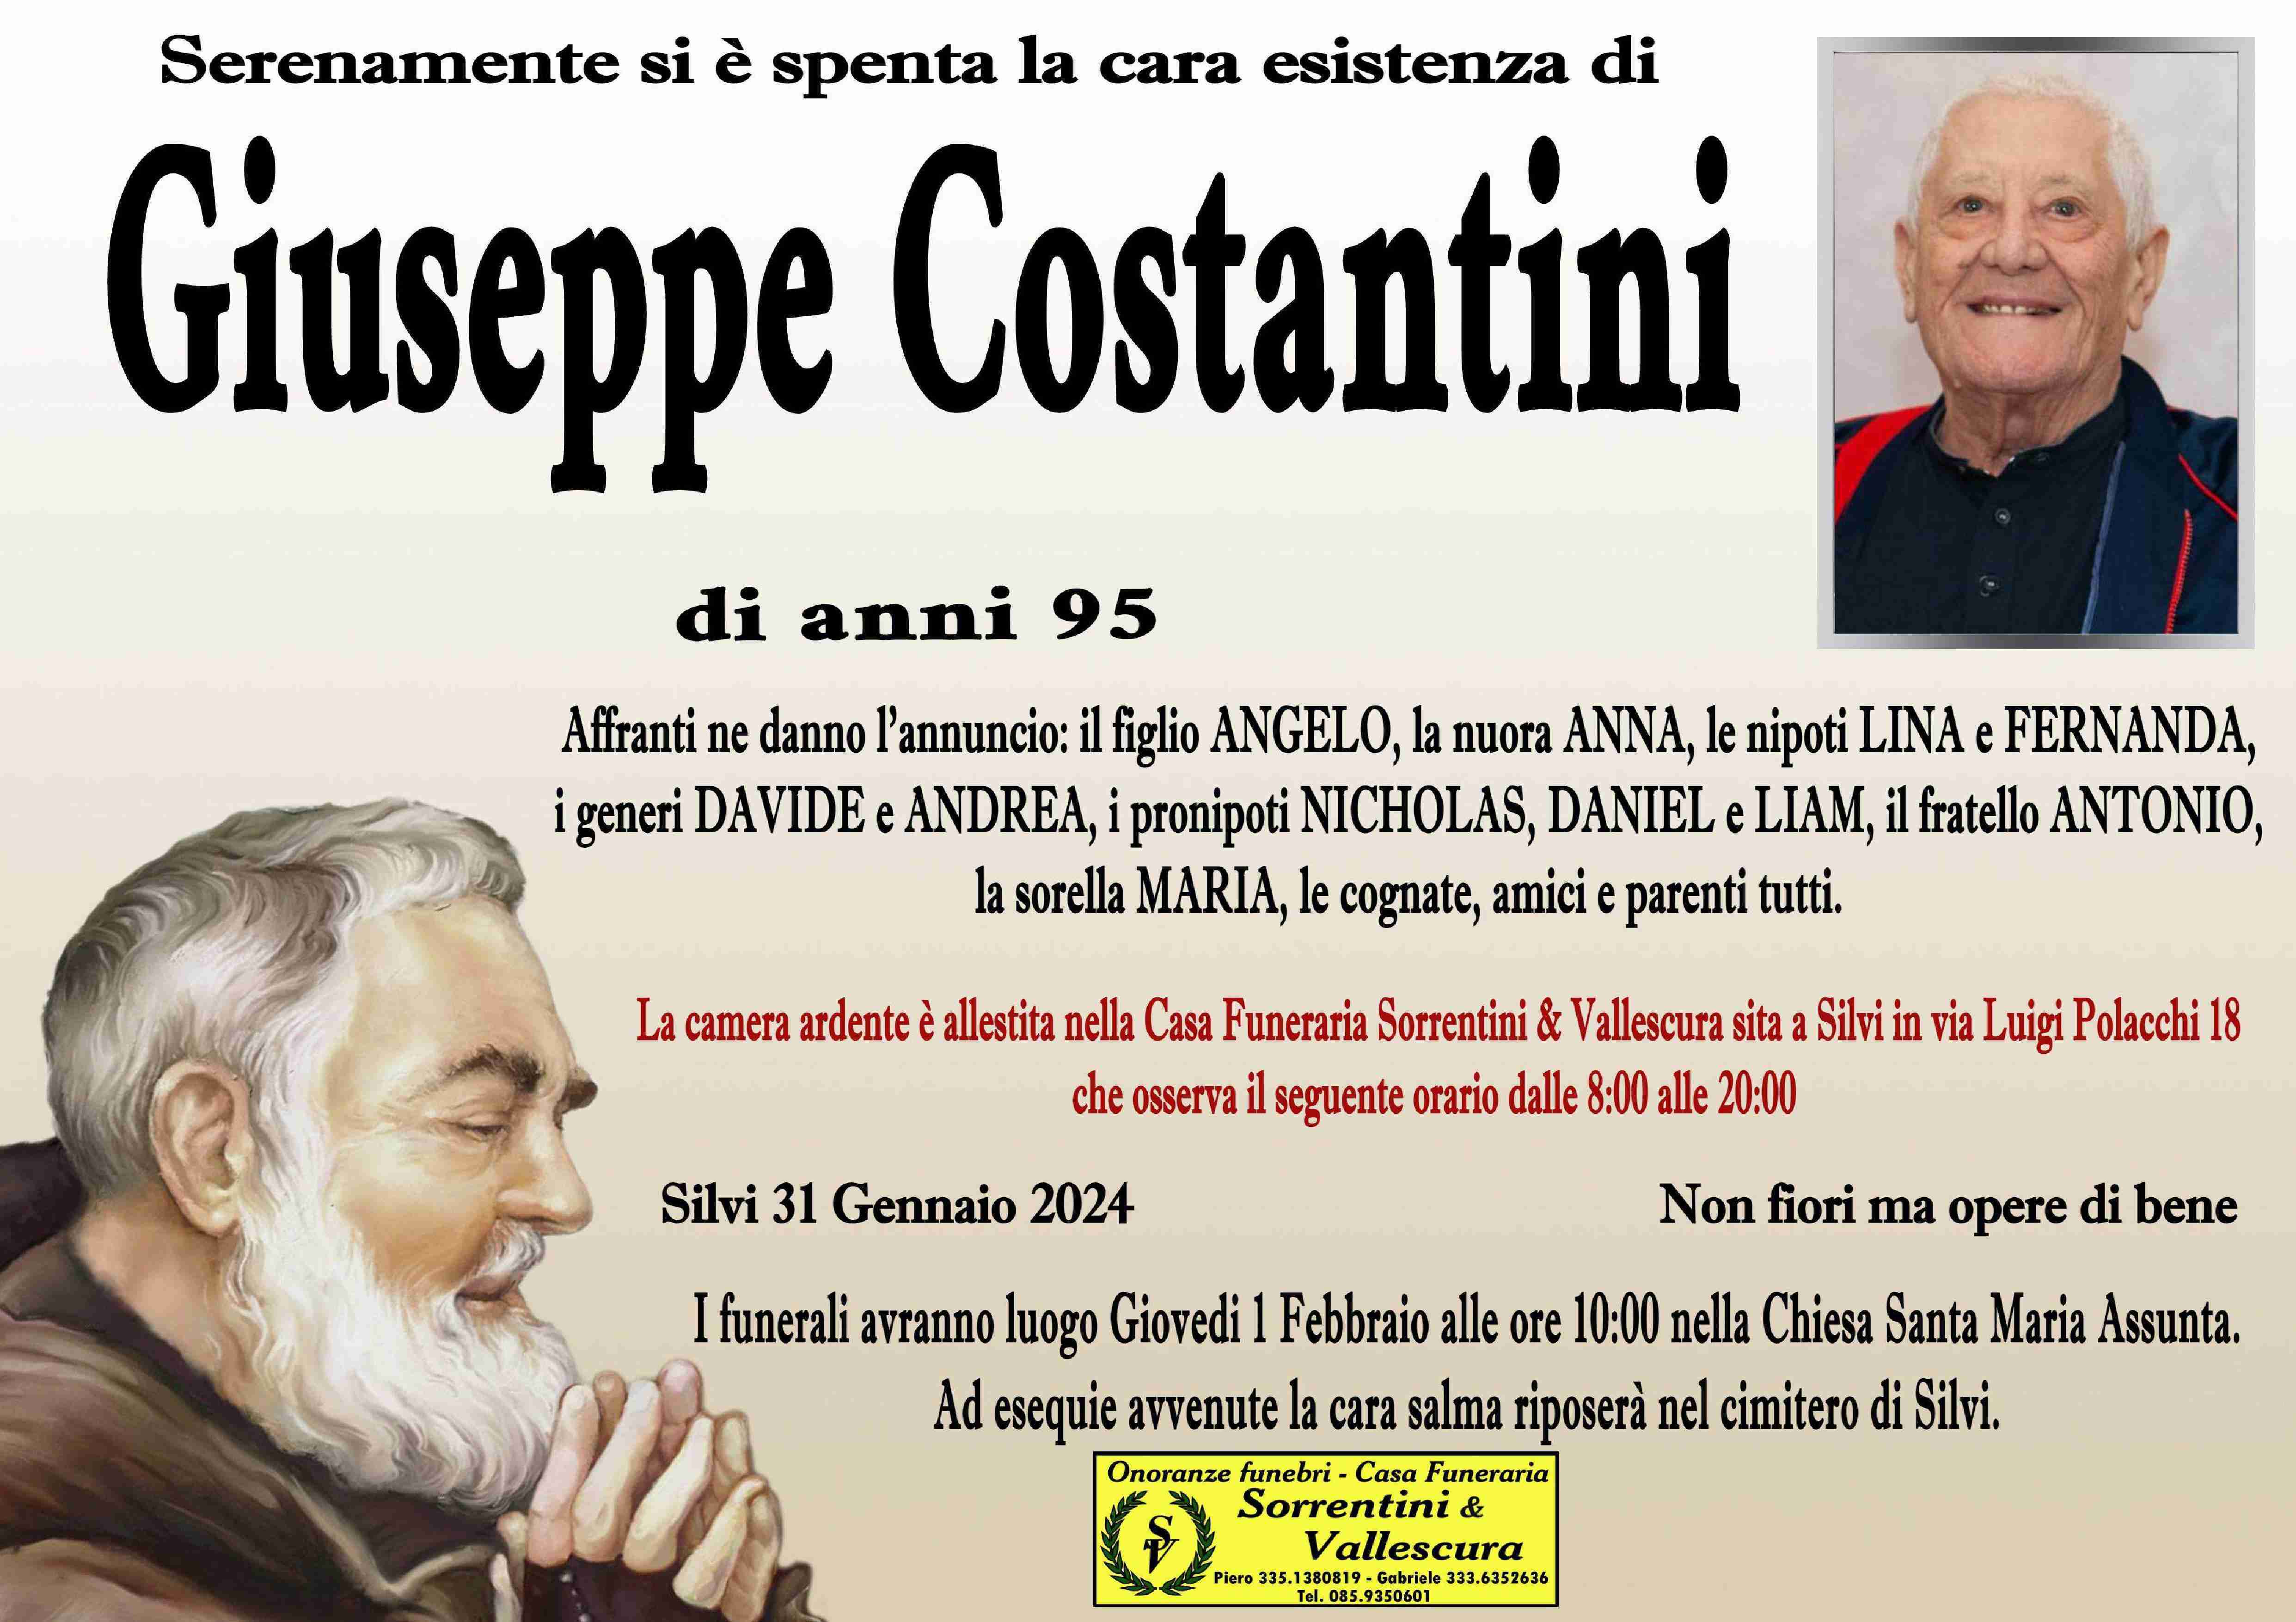 Giuseppe Costantini